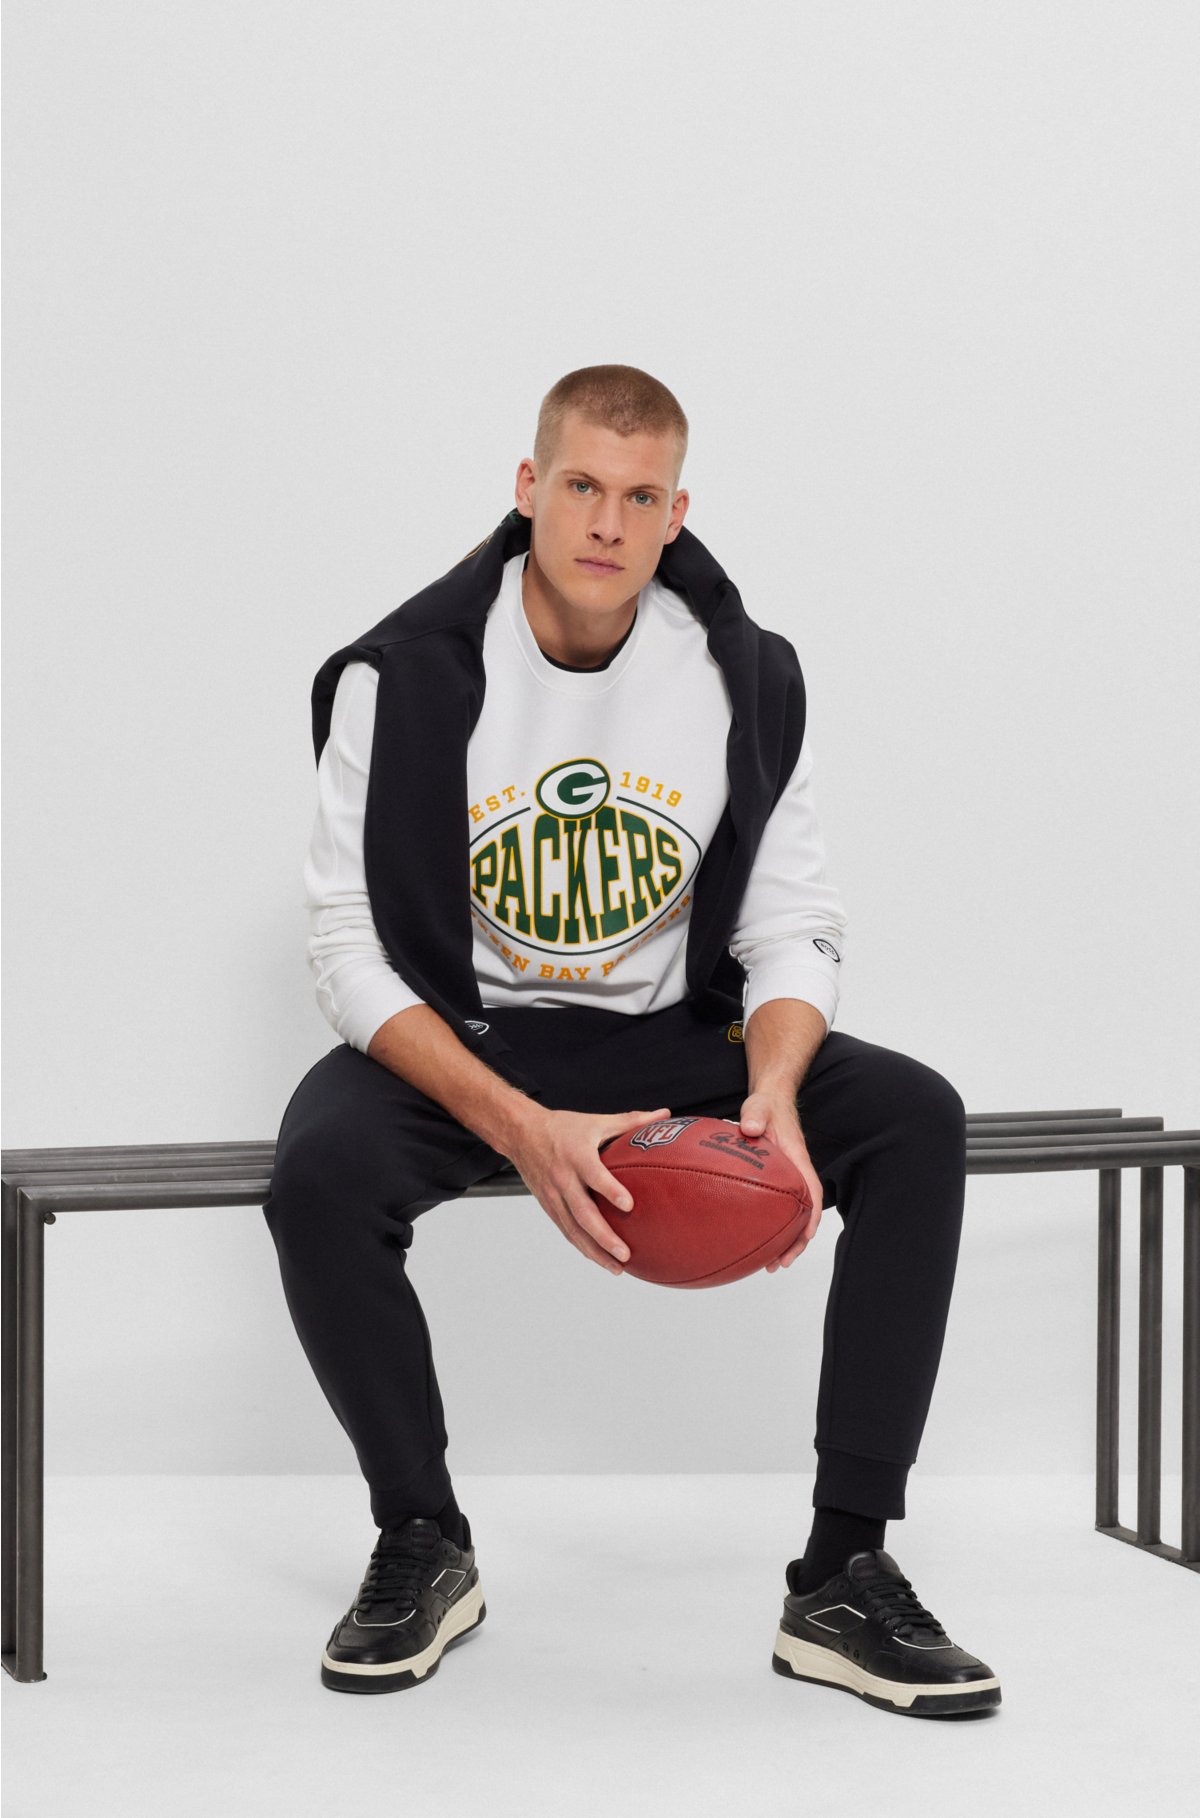 BOSS x NFL cotton-blend sweatshirt with collaborative branding, Packers